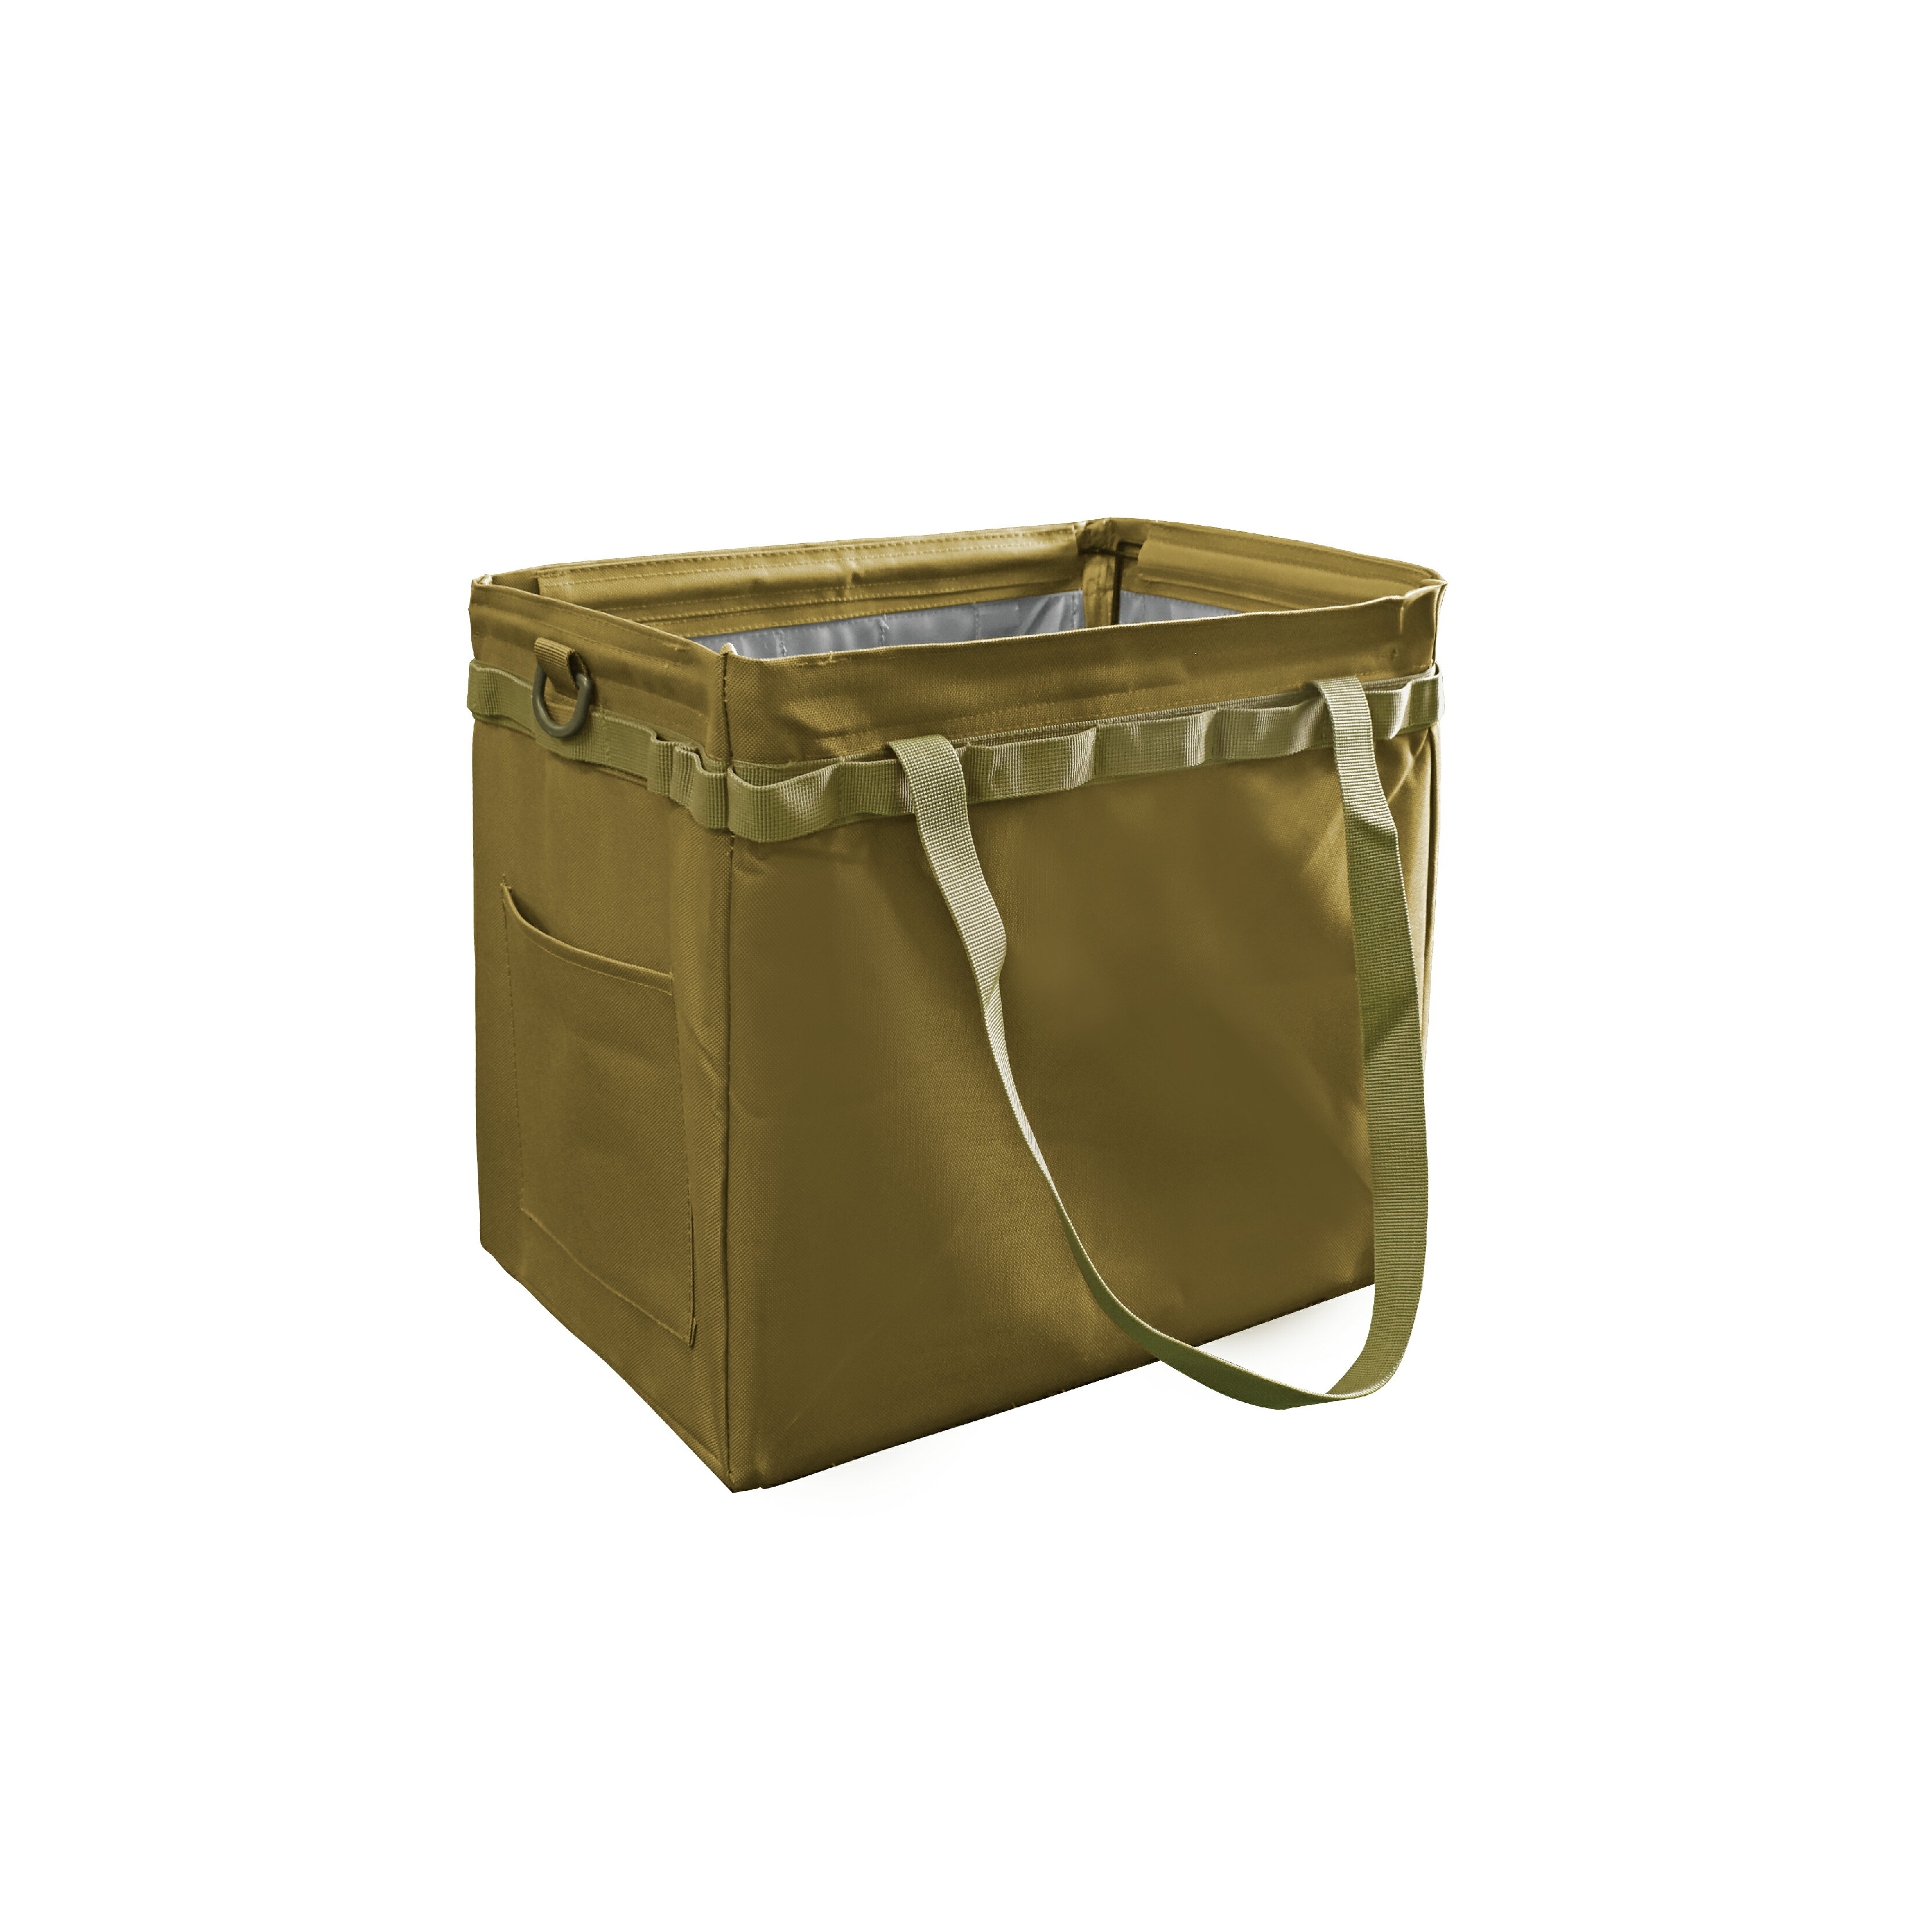 【Treewalker露遊】裝備戰術收納袋 收納包 裝備帶 收納箱 戰術裝備袋 摺疊工具袋 摺疊收納提袋 露營戶外